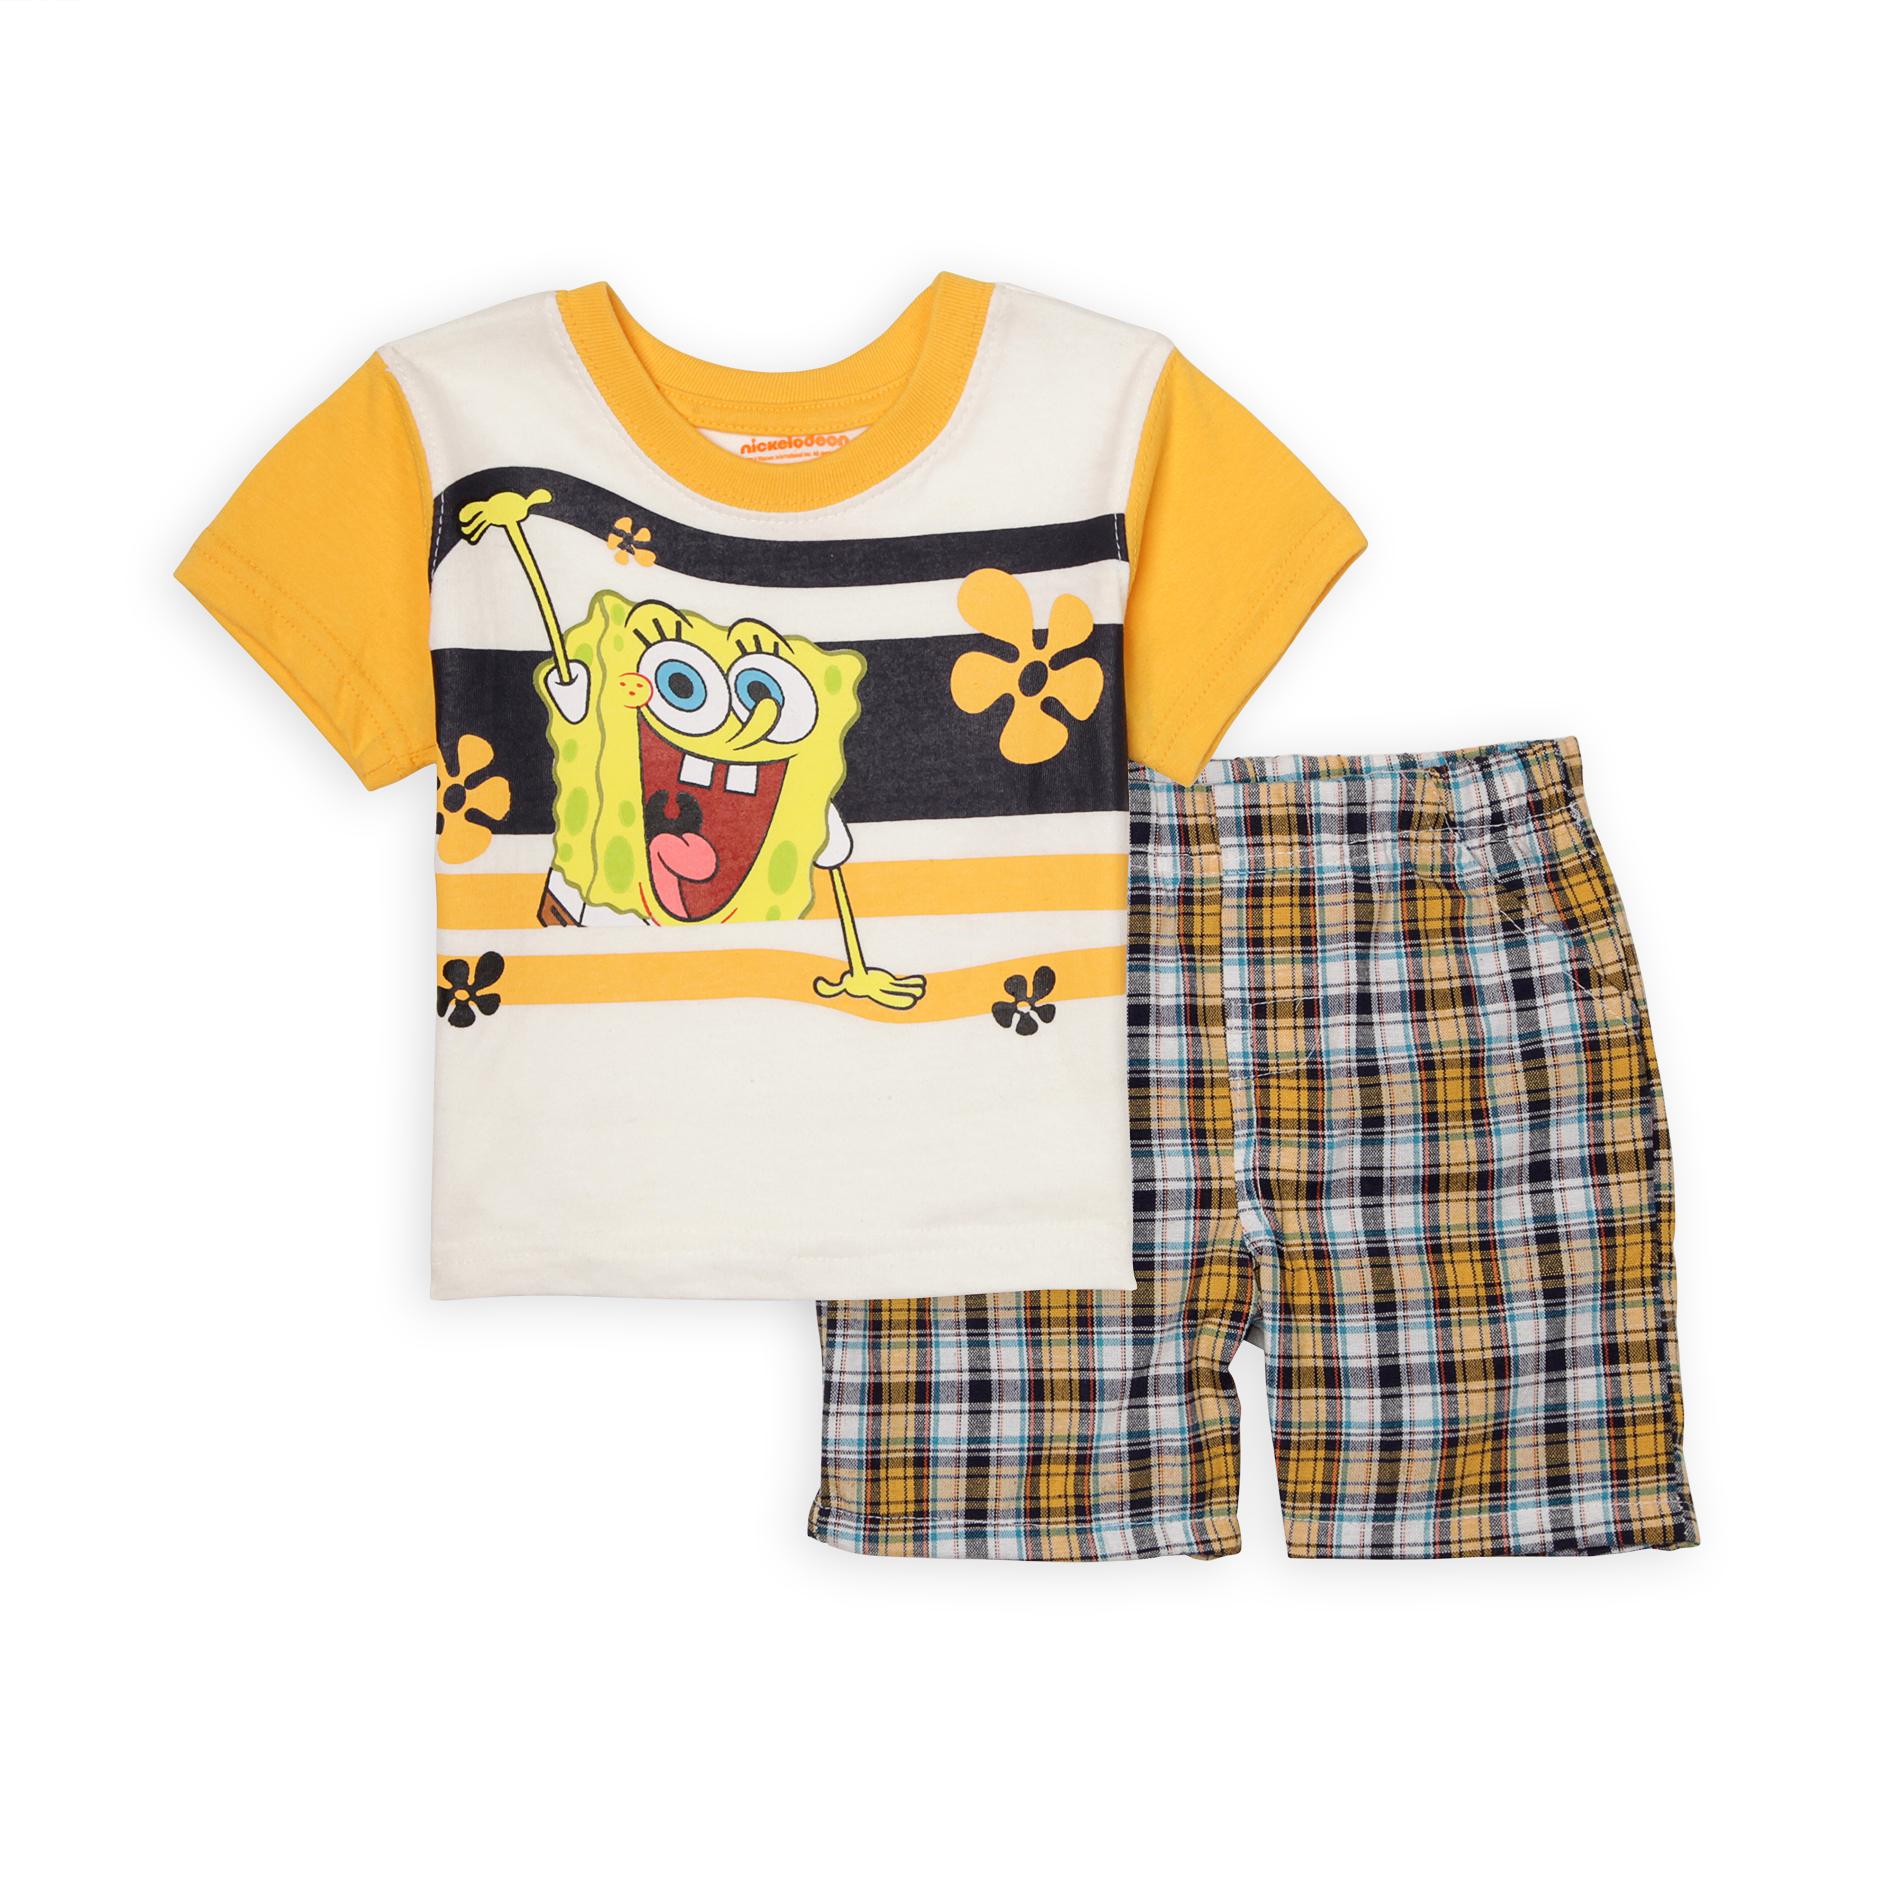 Nickelodeon Infant Boy's Graphic T-Shirt & Shorts - Plaid